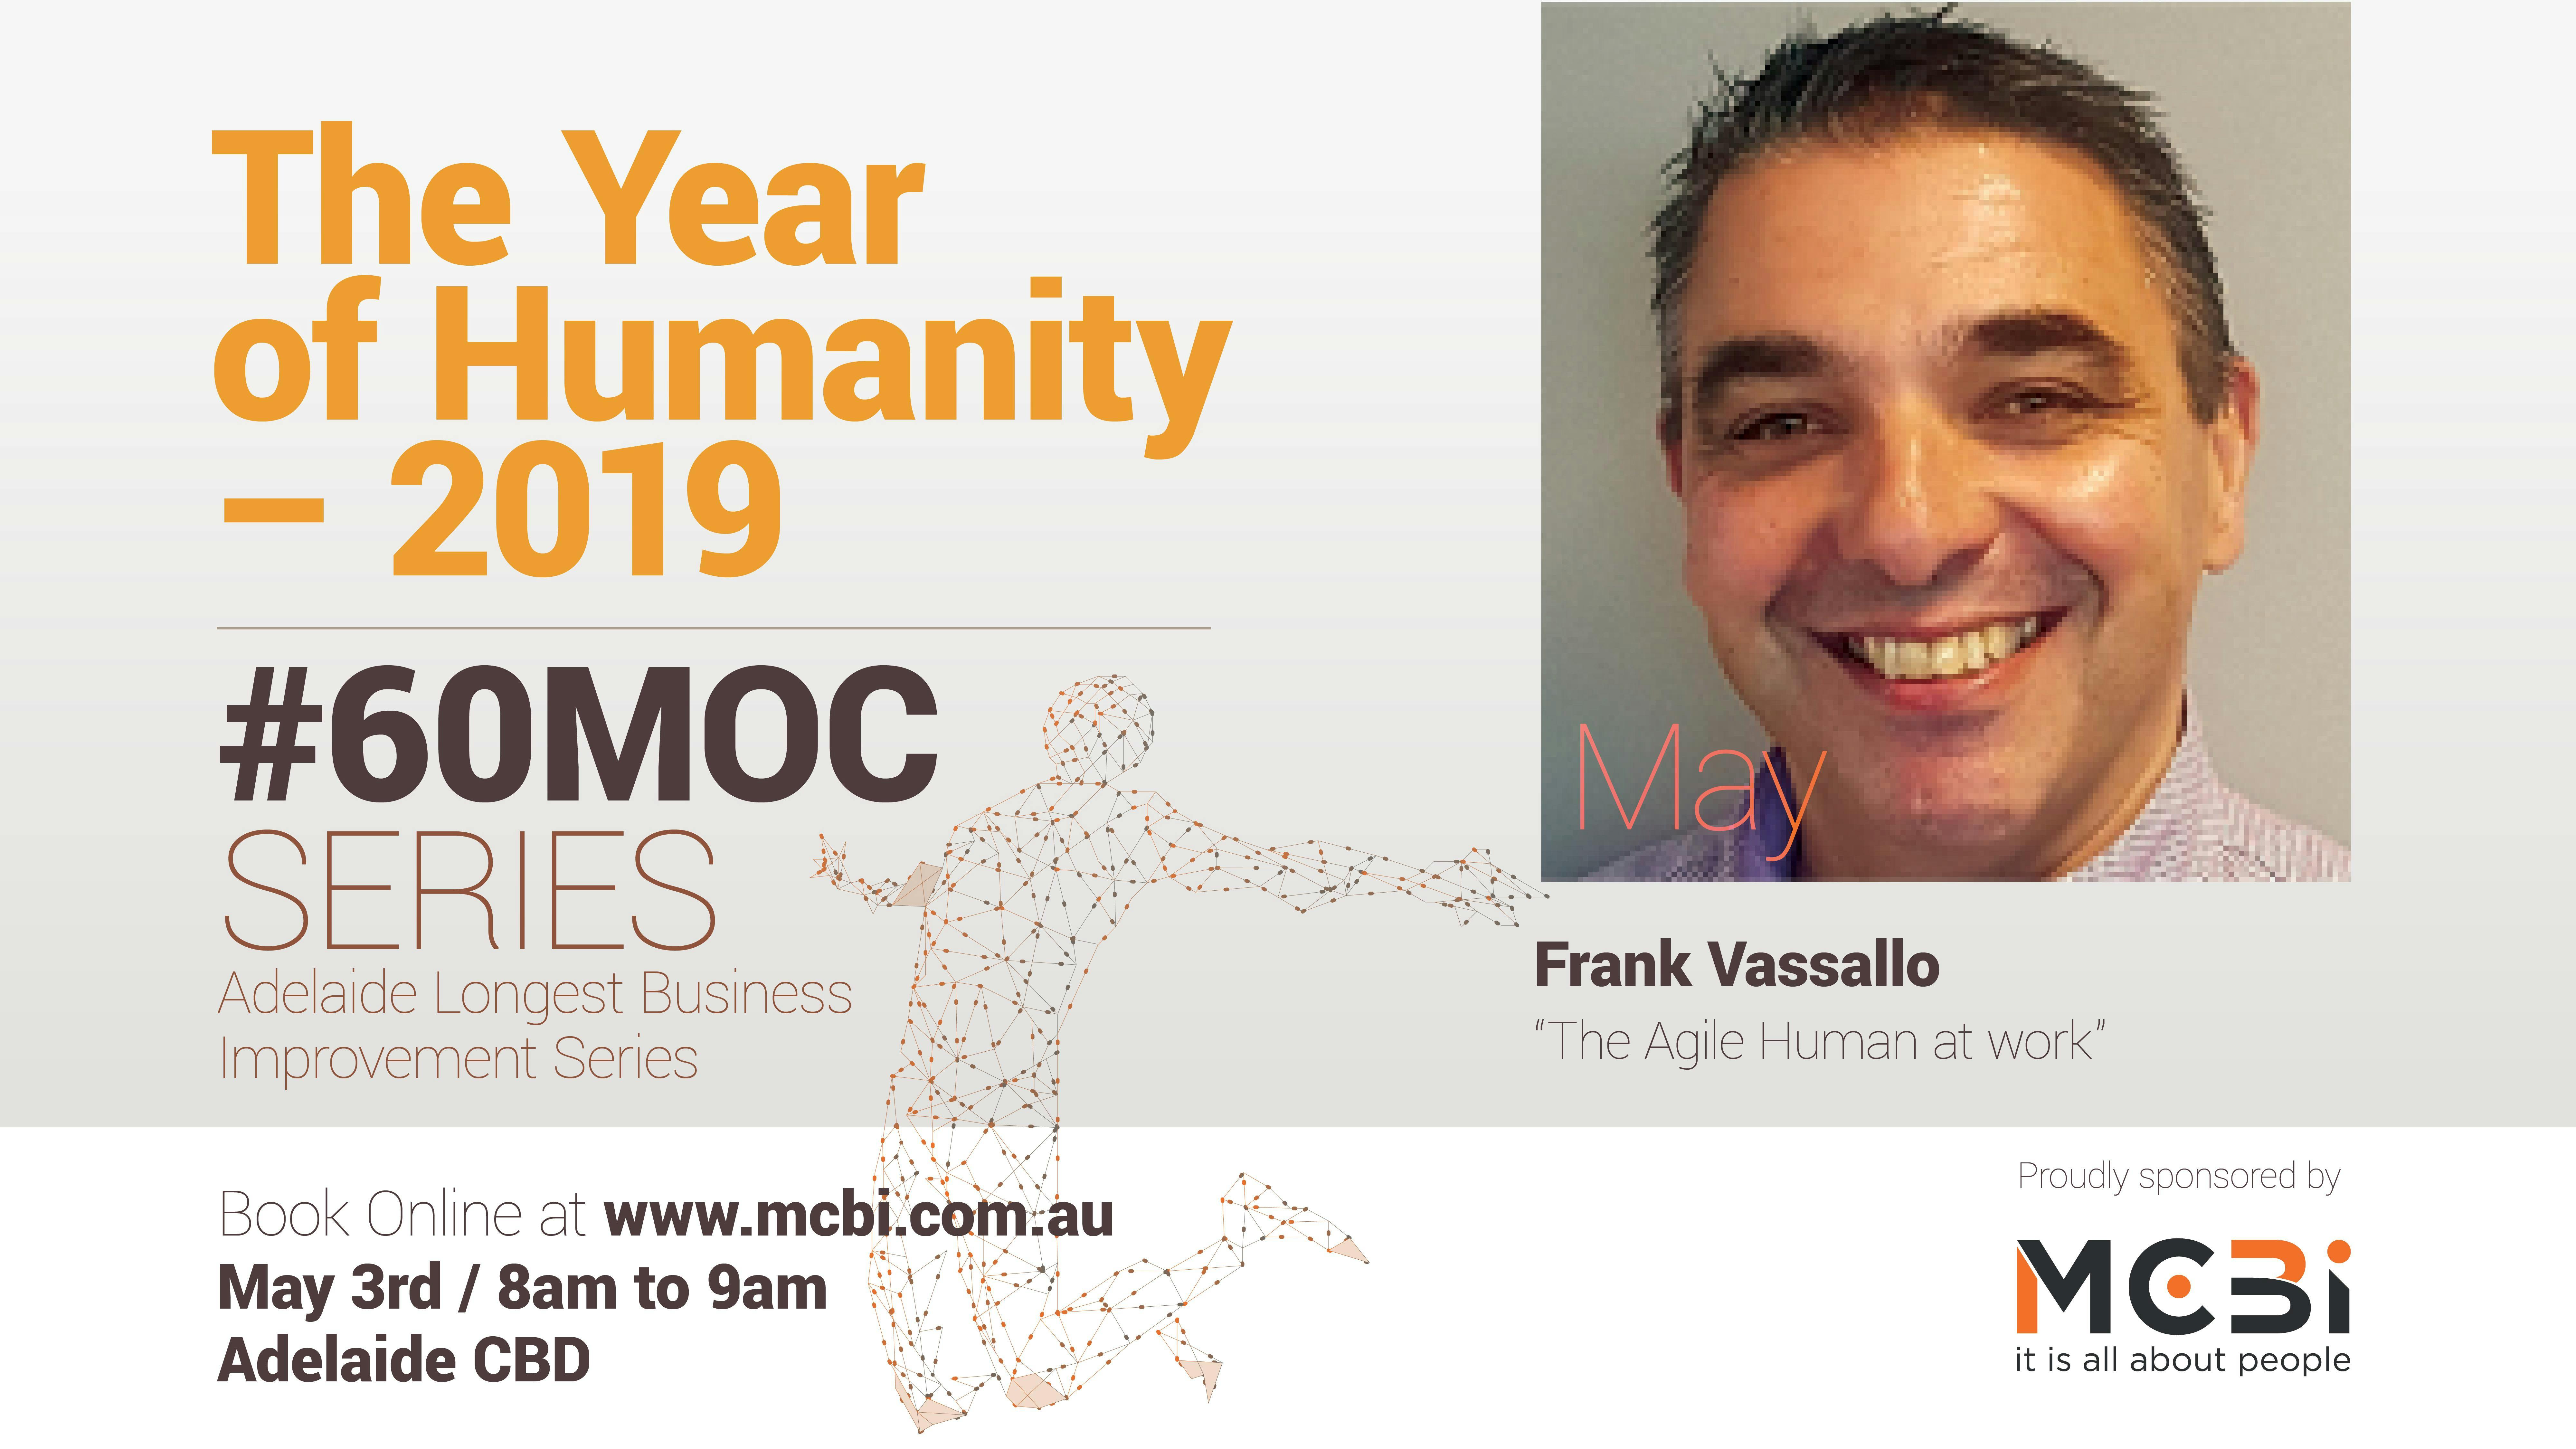 MAY #60MOC 'The Agile Human' with Frank Vassallo